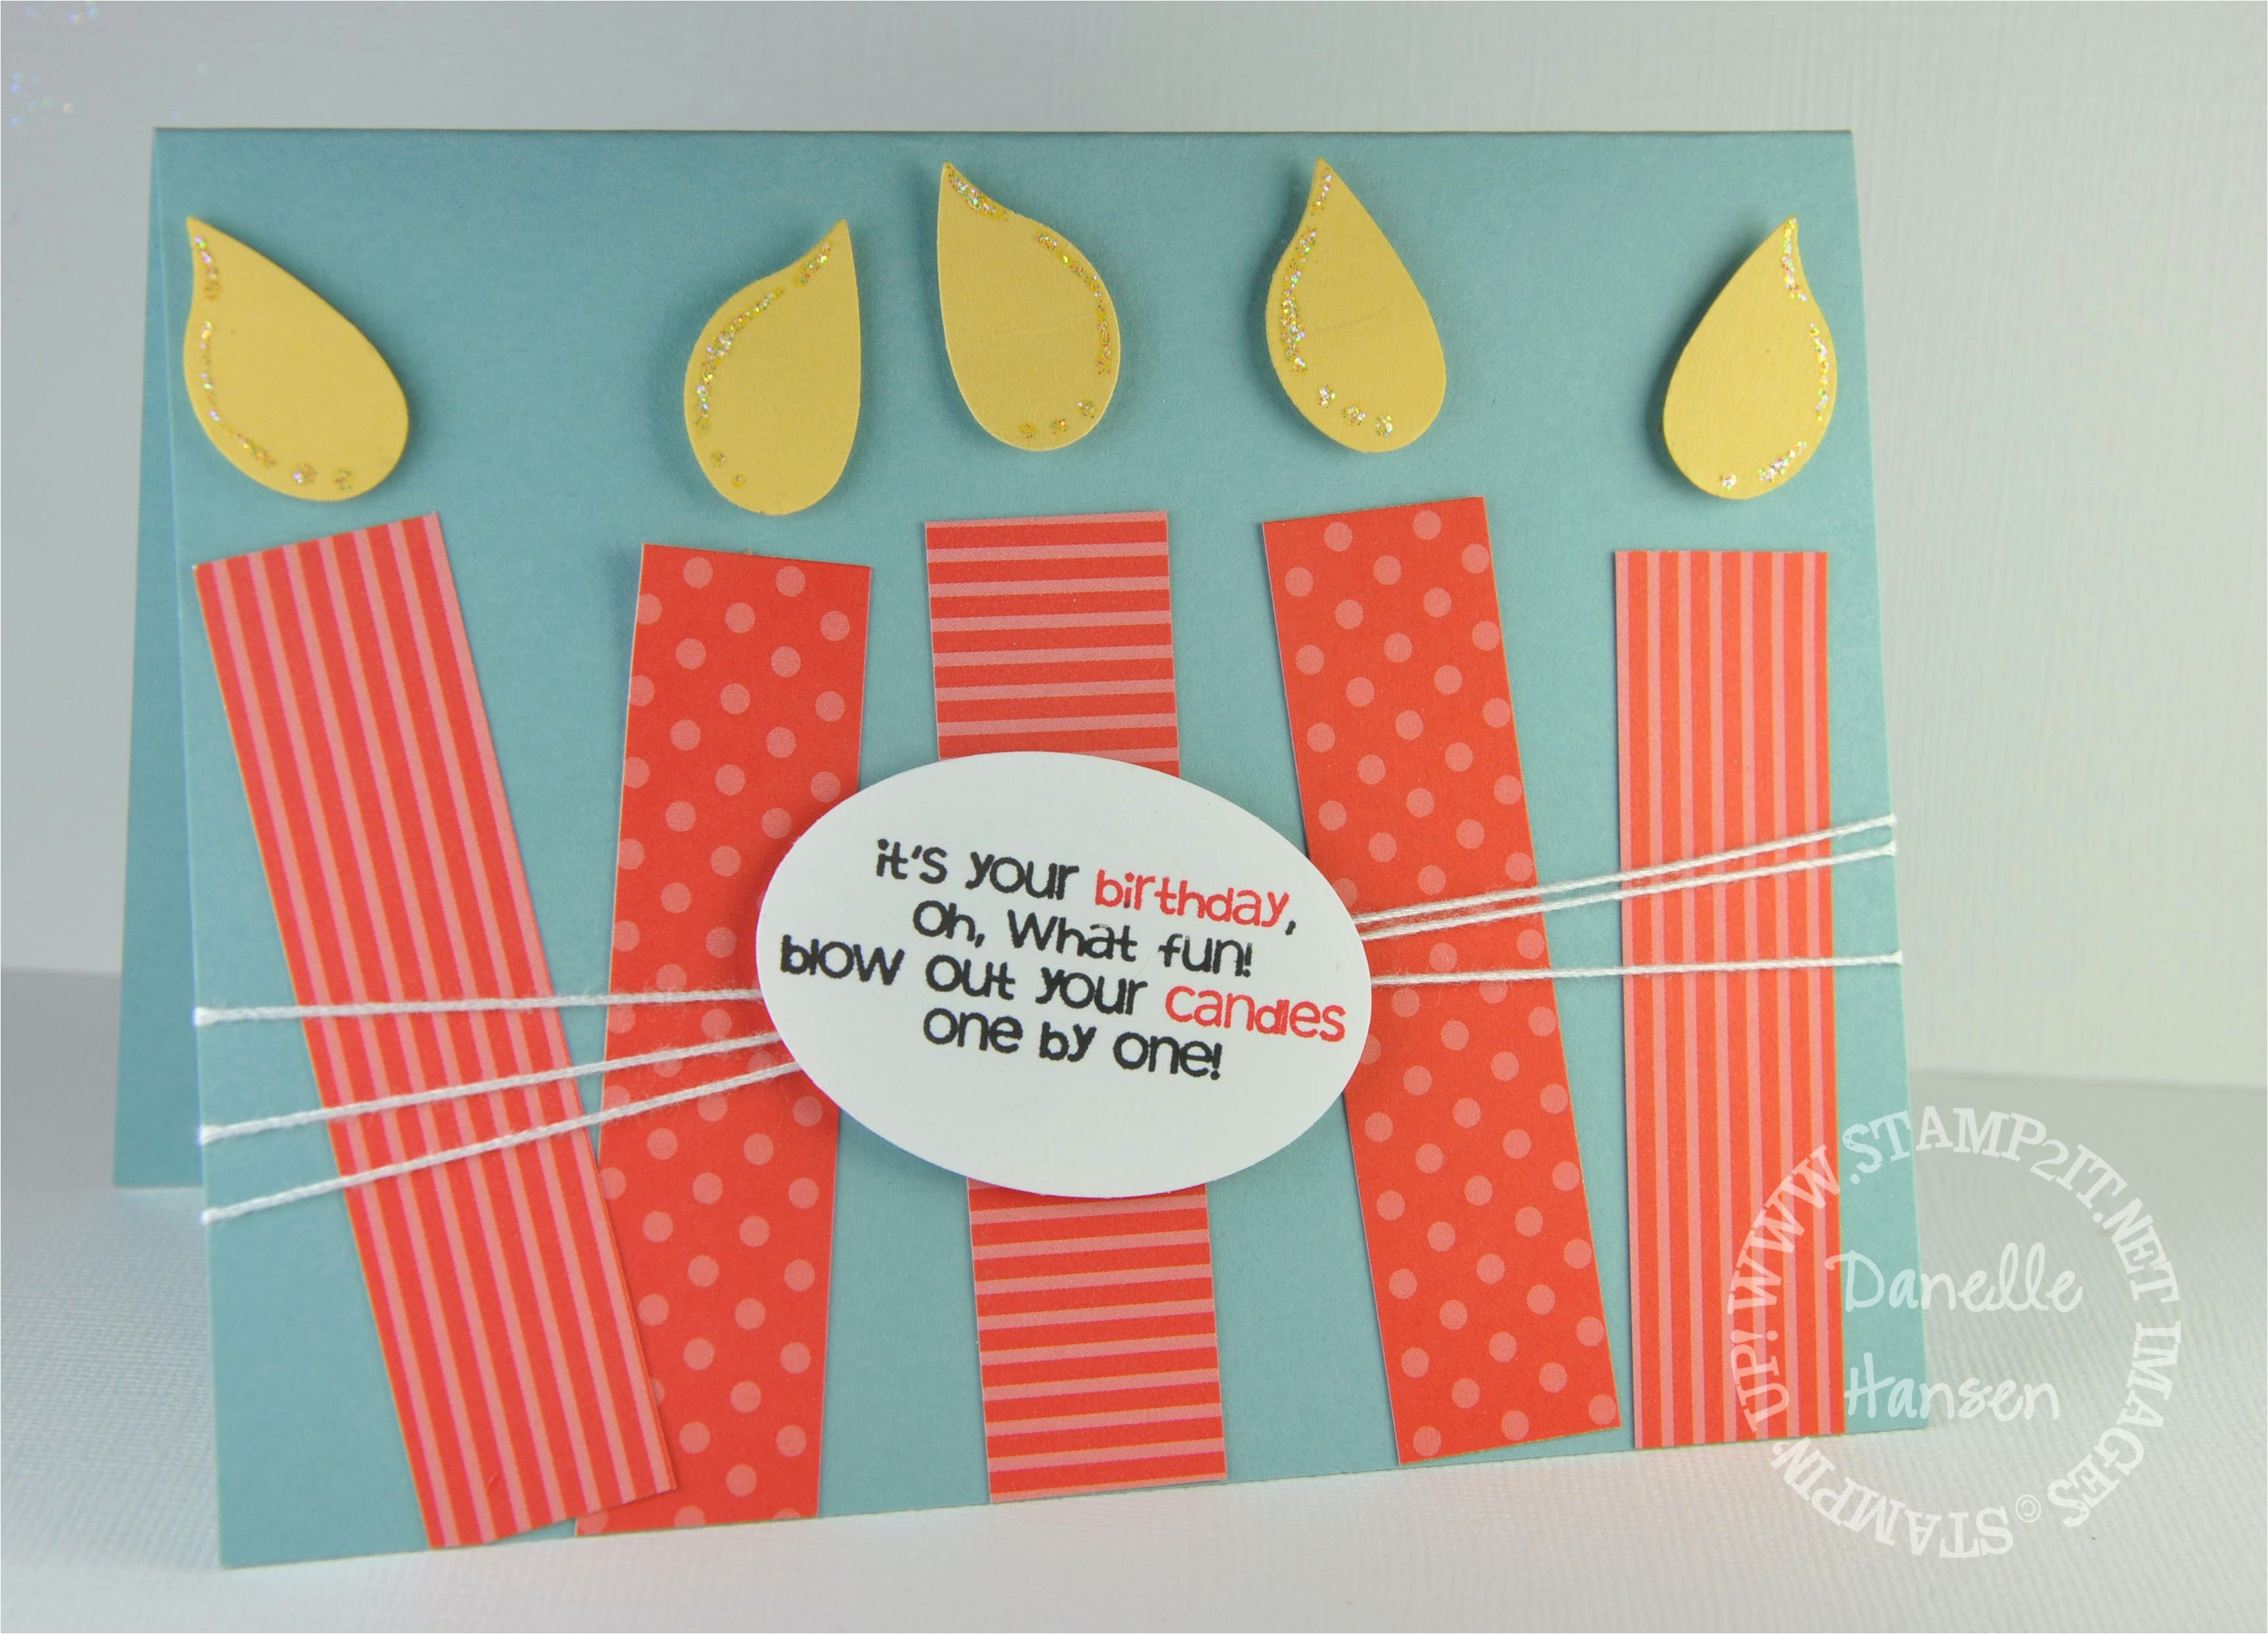 Making Birthday Cards Ideas Diy Birthday Cards For Husband Creative Handmade Birthday Card Ideas